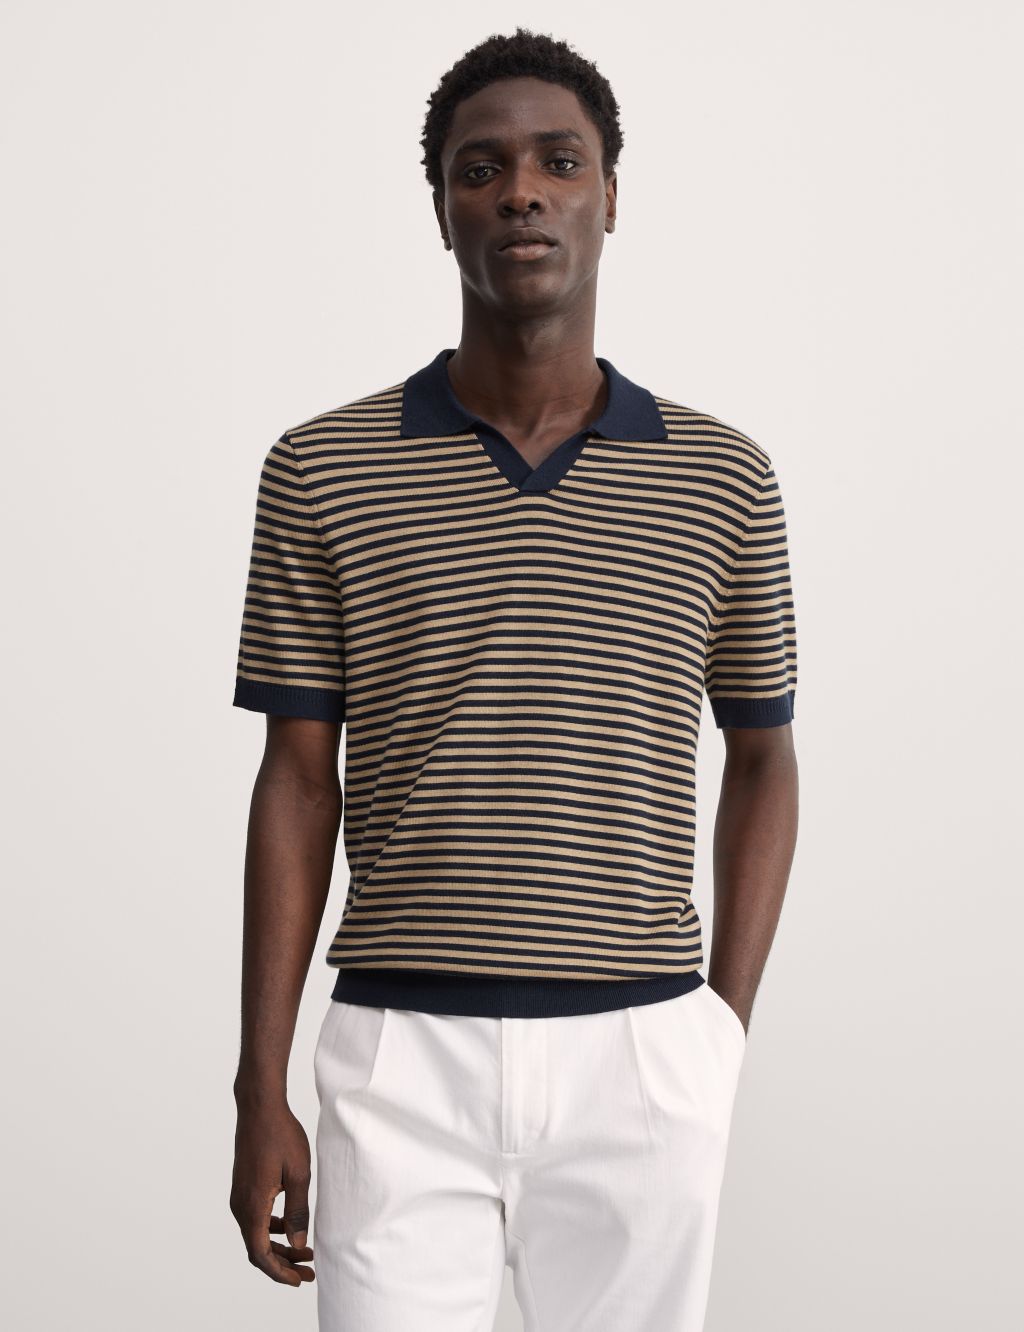 Merino Wool Rich Striped Knitted T-Shirt